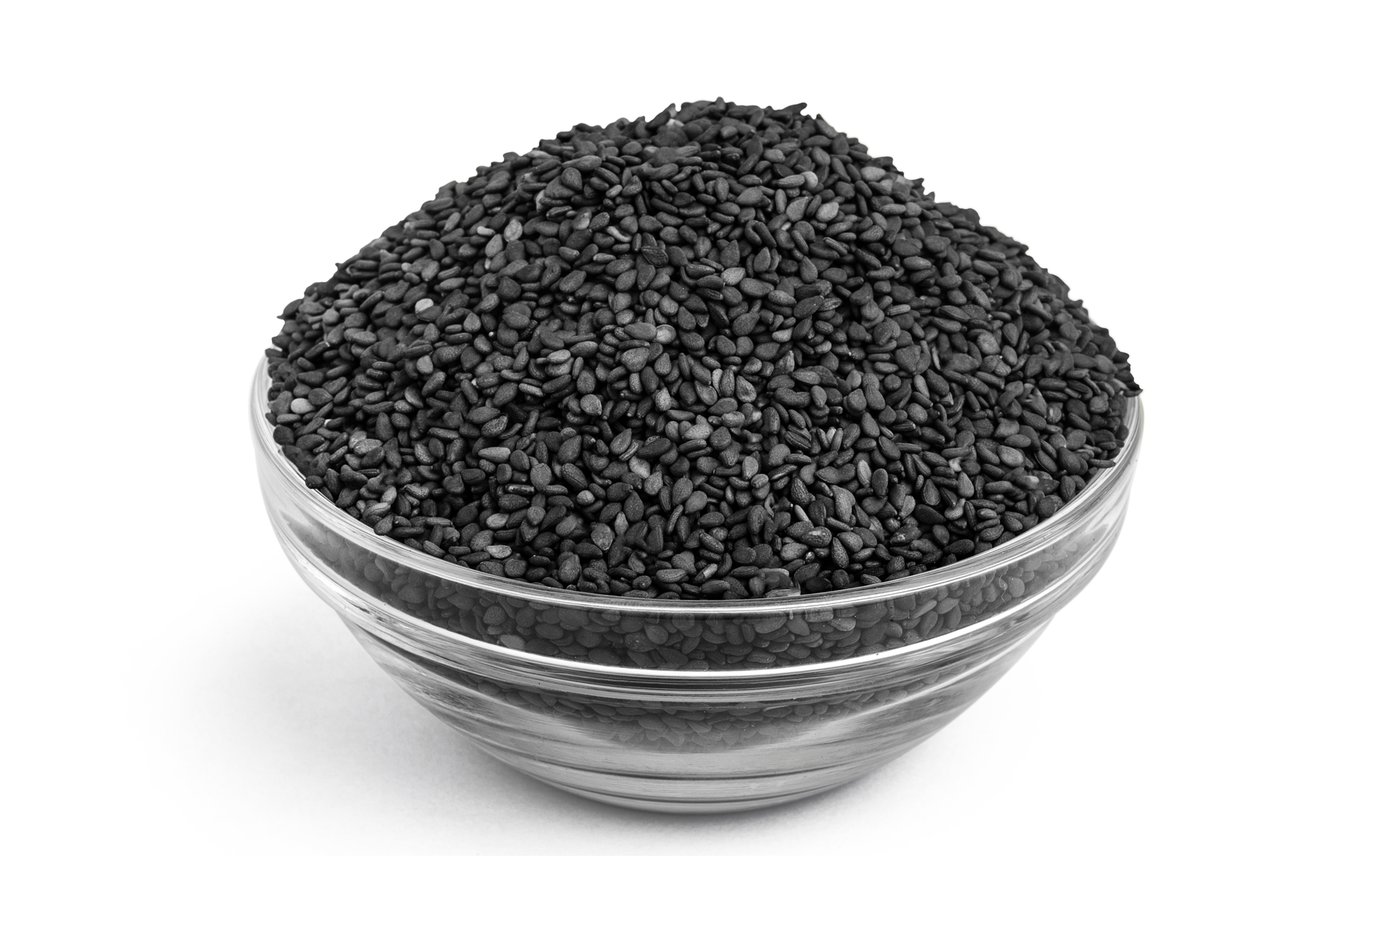 Black Sesame Seeds image zoom